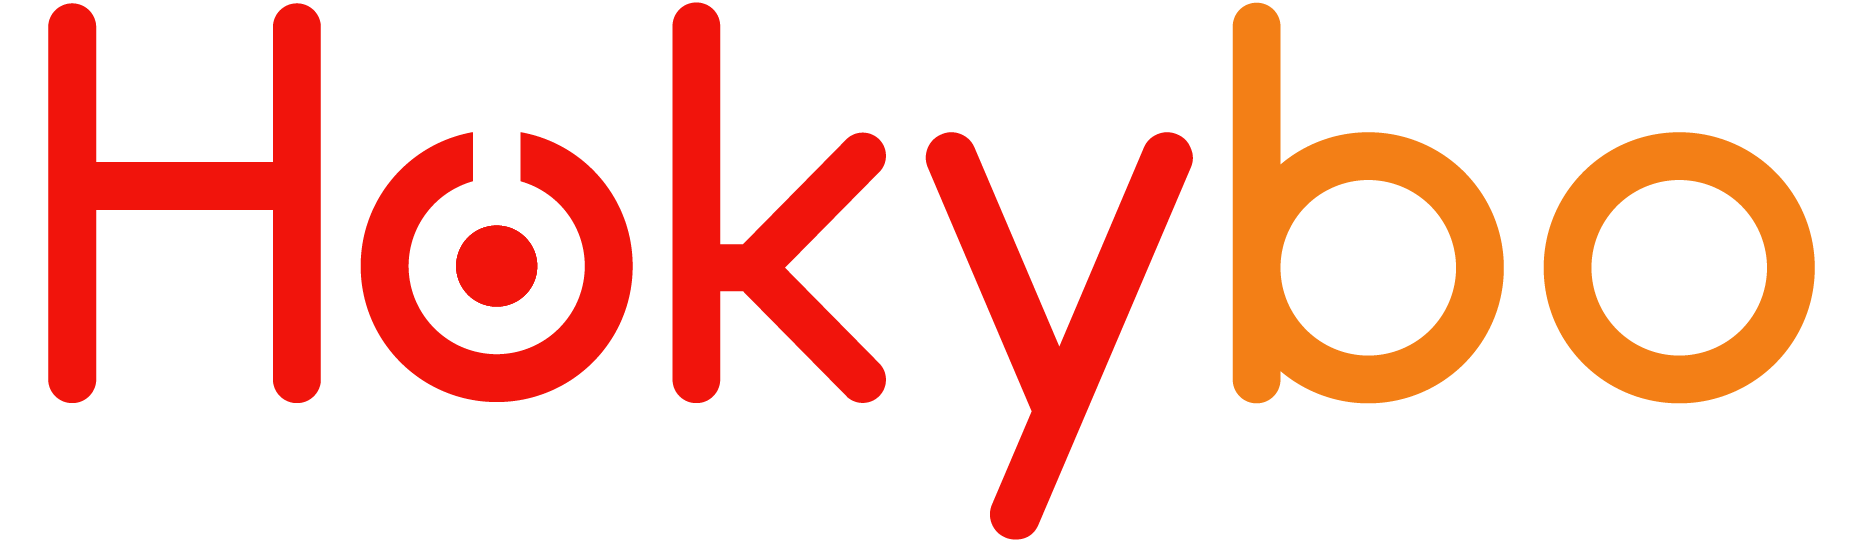 hokybo logo